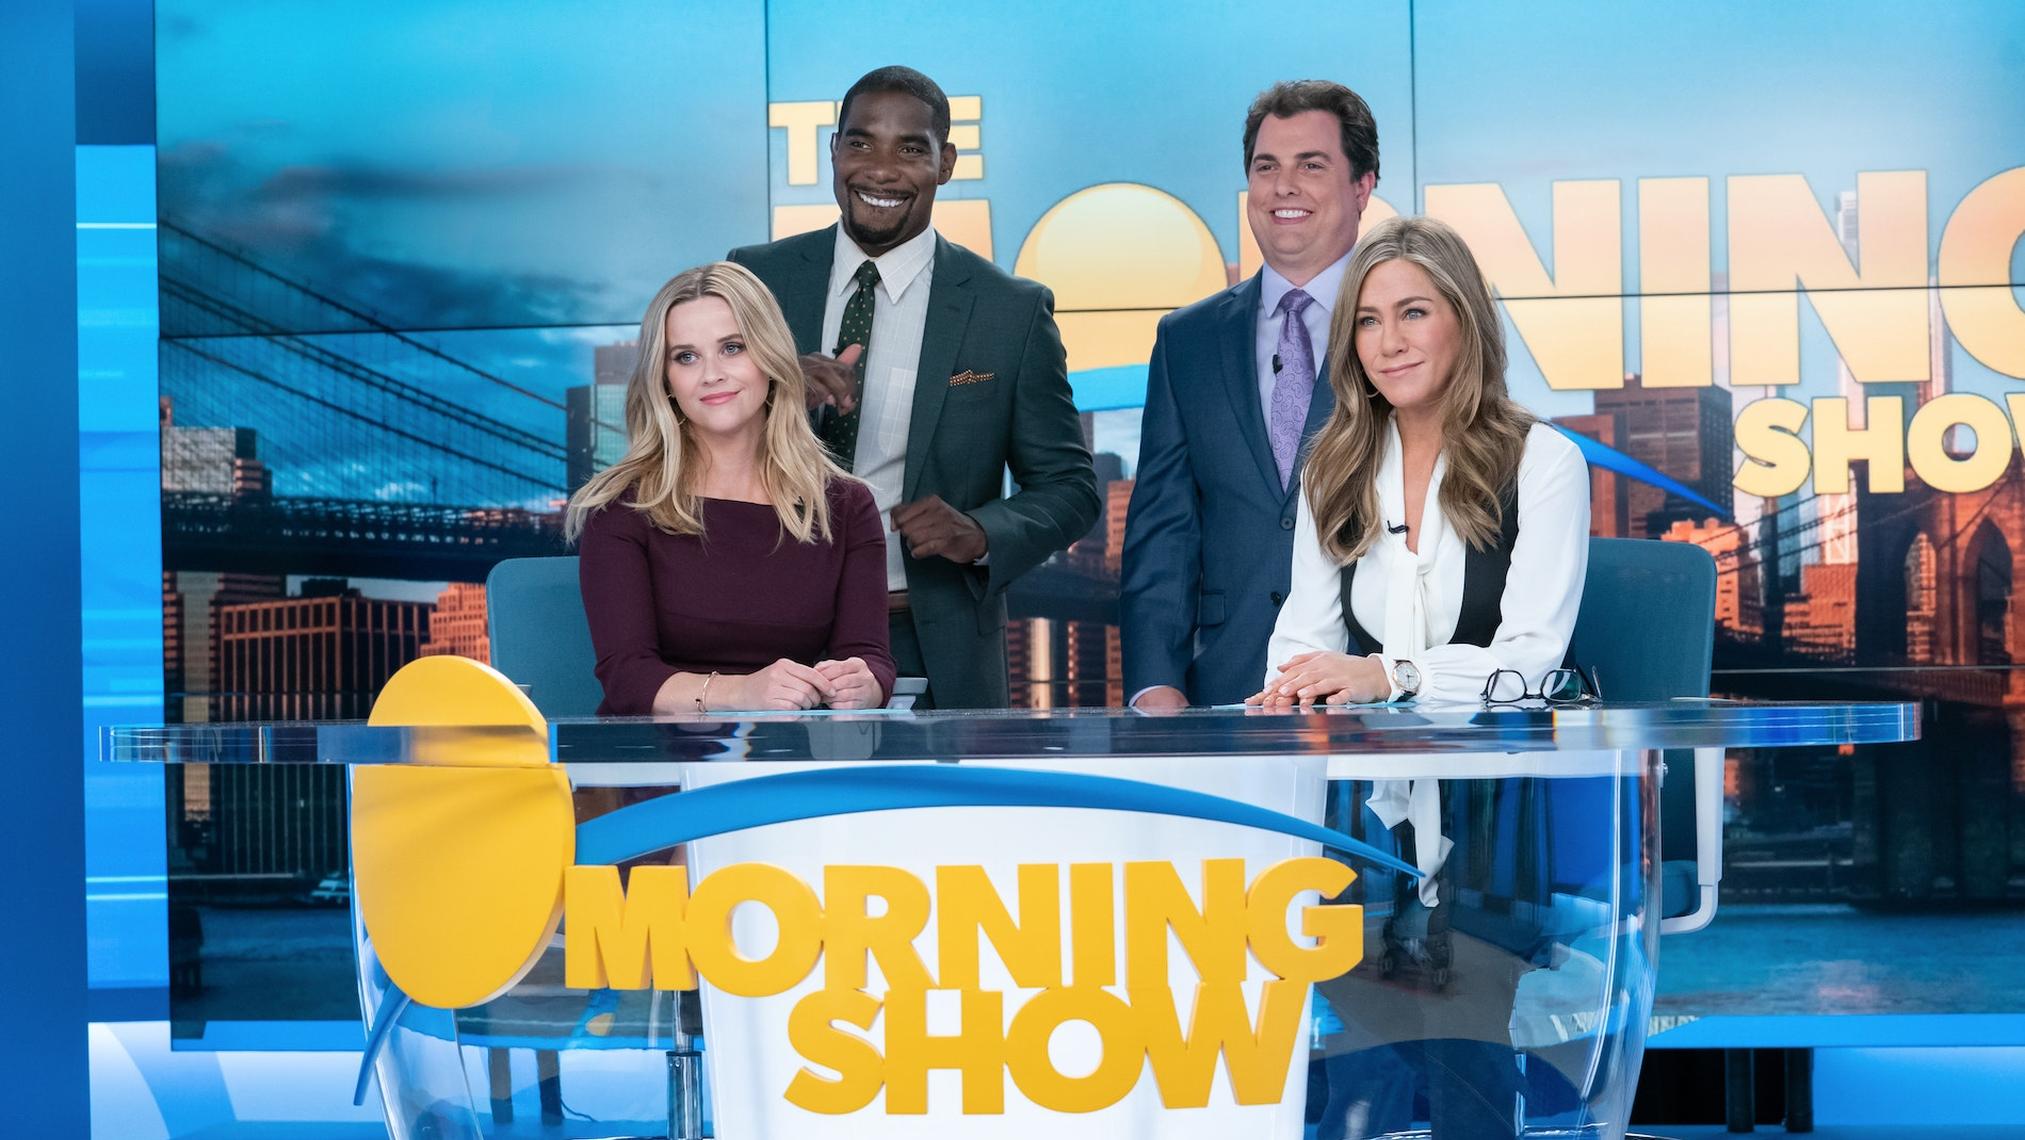 The morning show season 3 poster